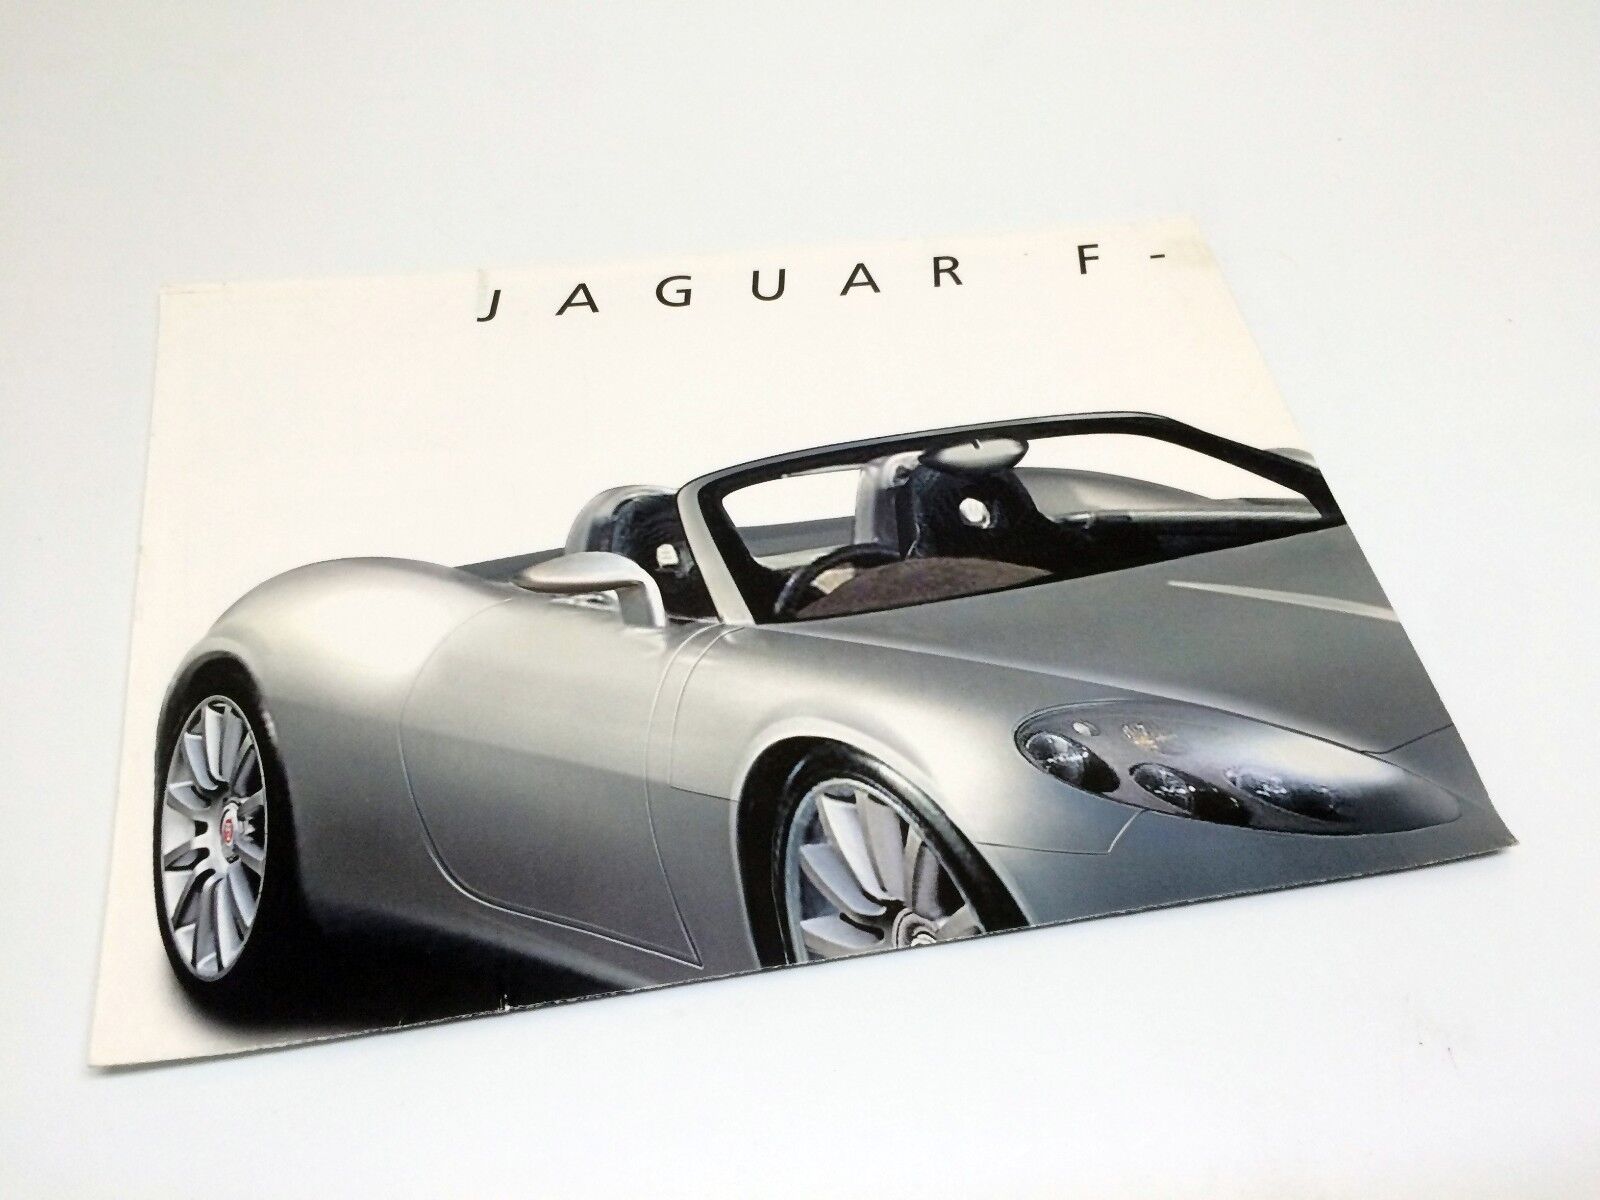 2000 Jaguar F-Type Concept Poster Brochure